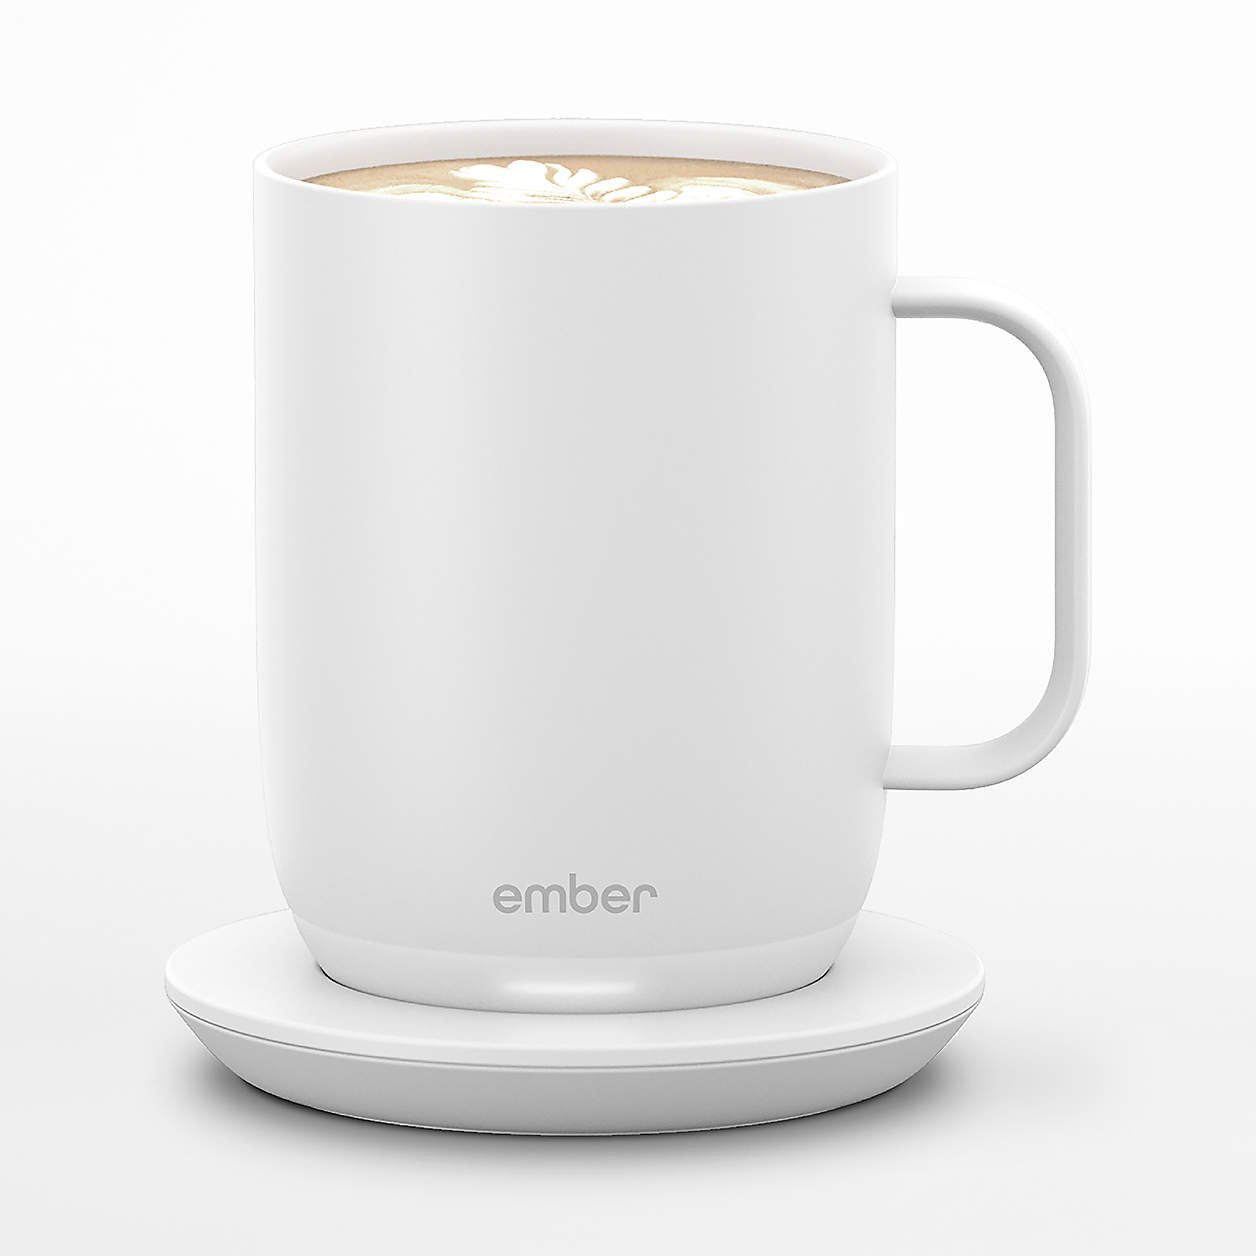 ember-mug-14-oz.-white-heated-coffee-mug.jpg